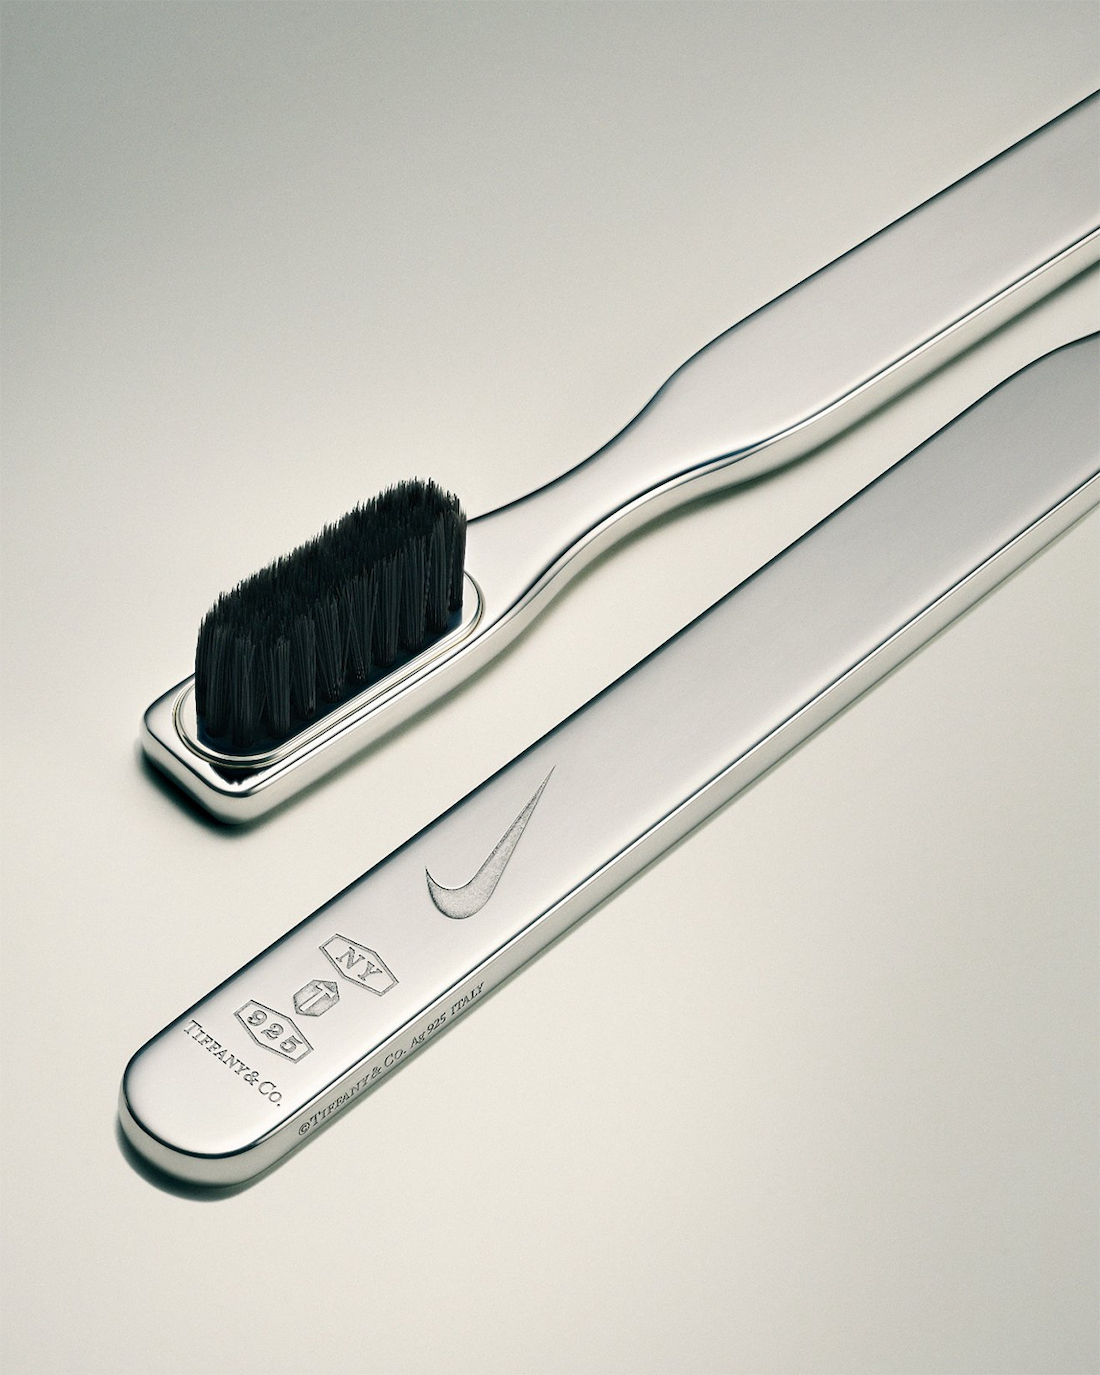 Tiffany Nike Toothbrush